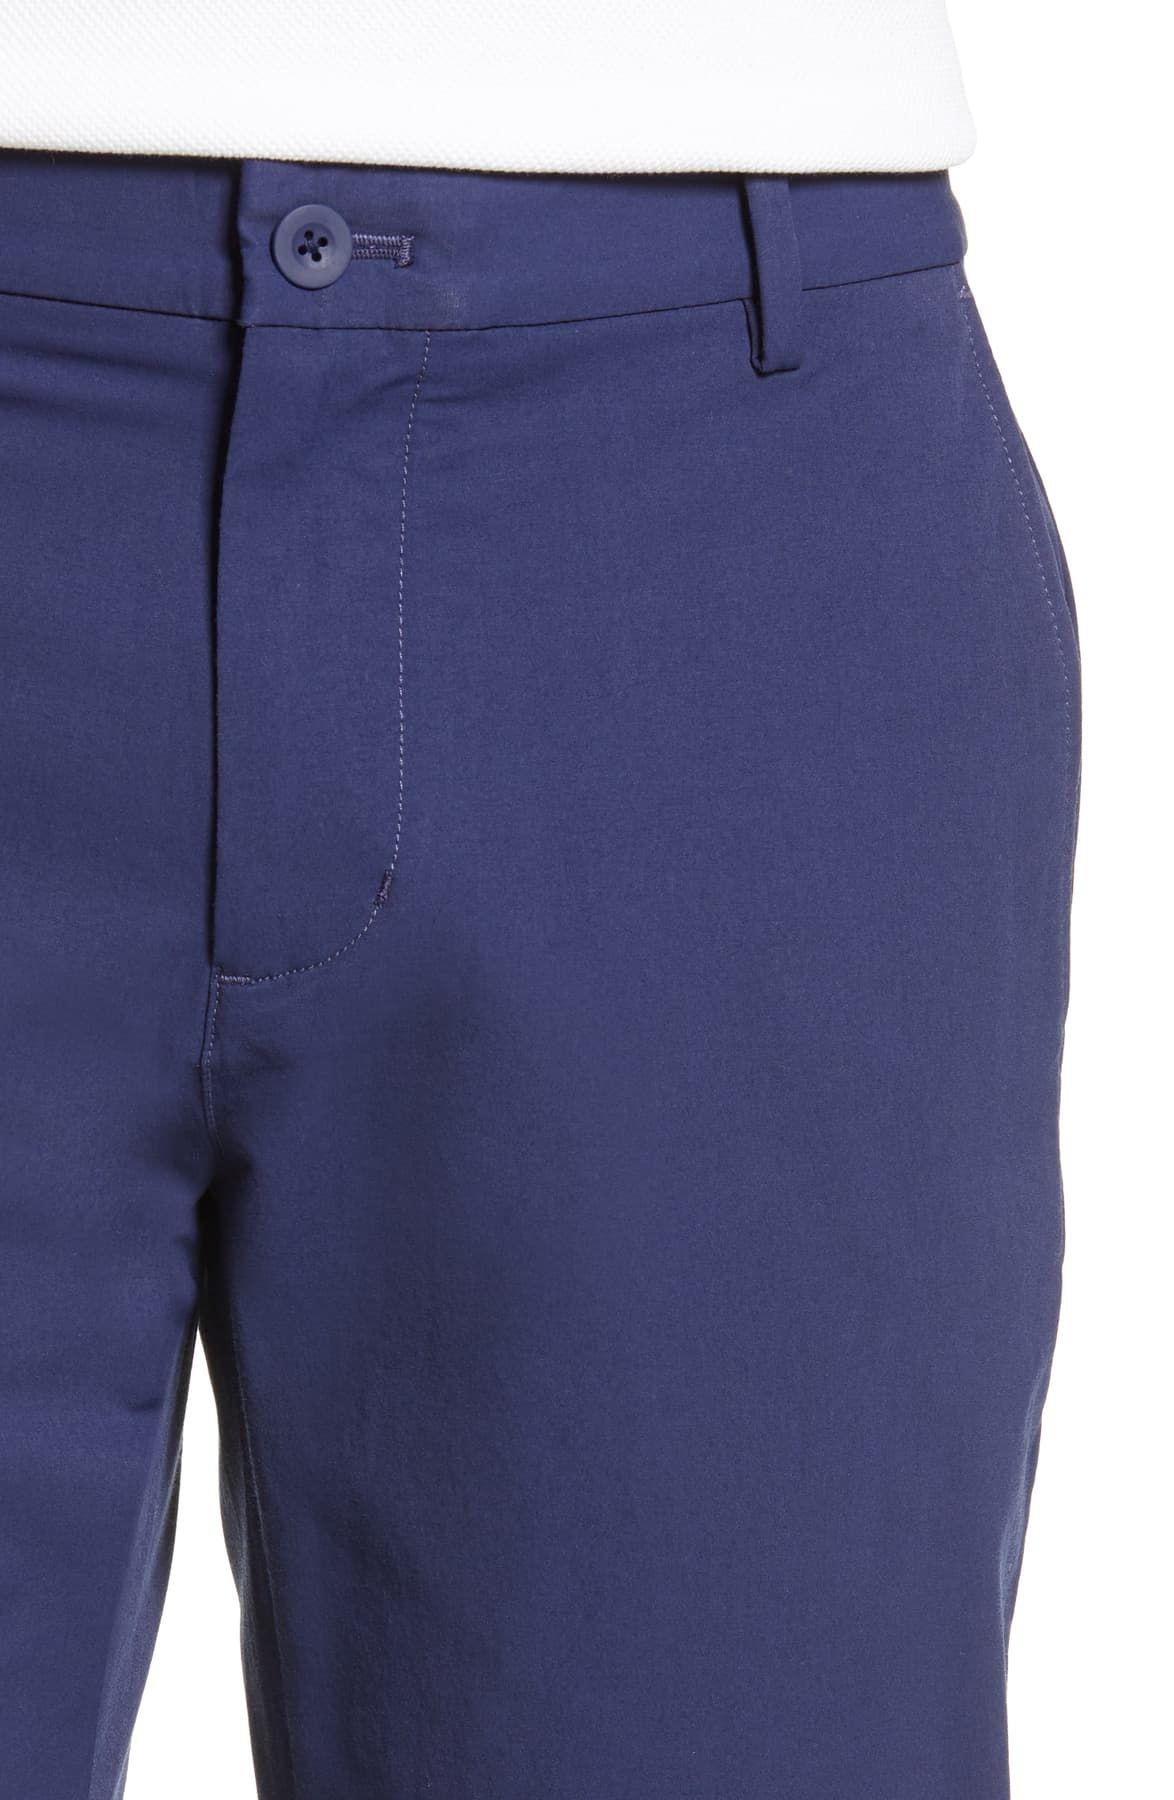 Vineyard Vines On The Go Slim Fit Performance Pants in Blue for Men - Lyst